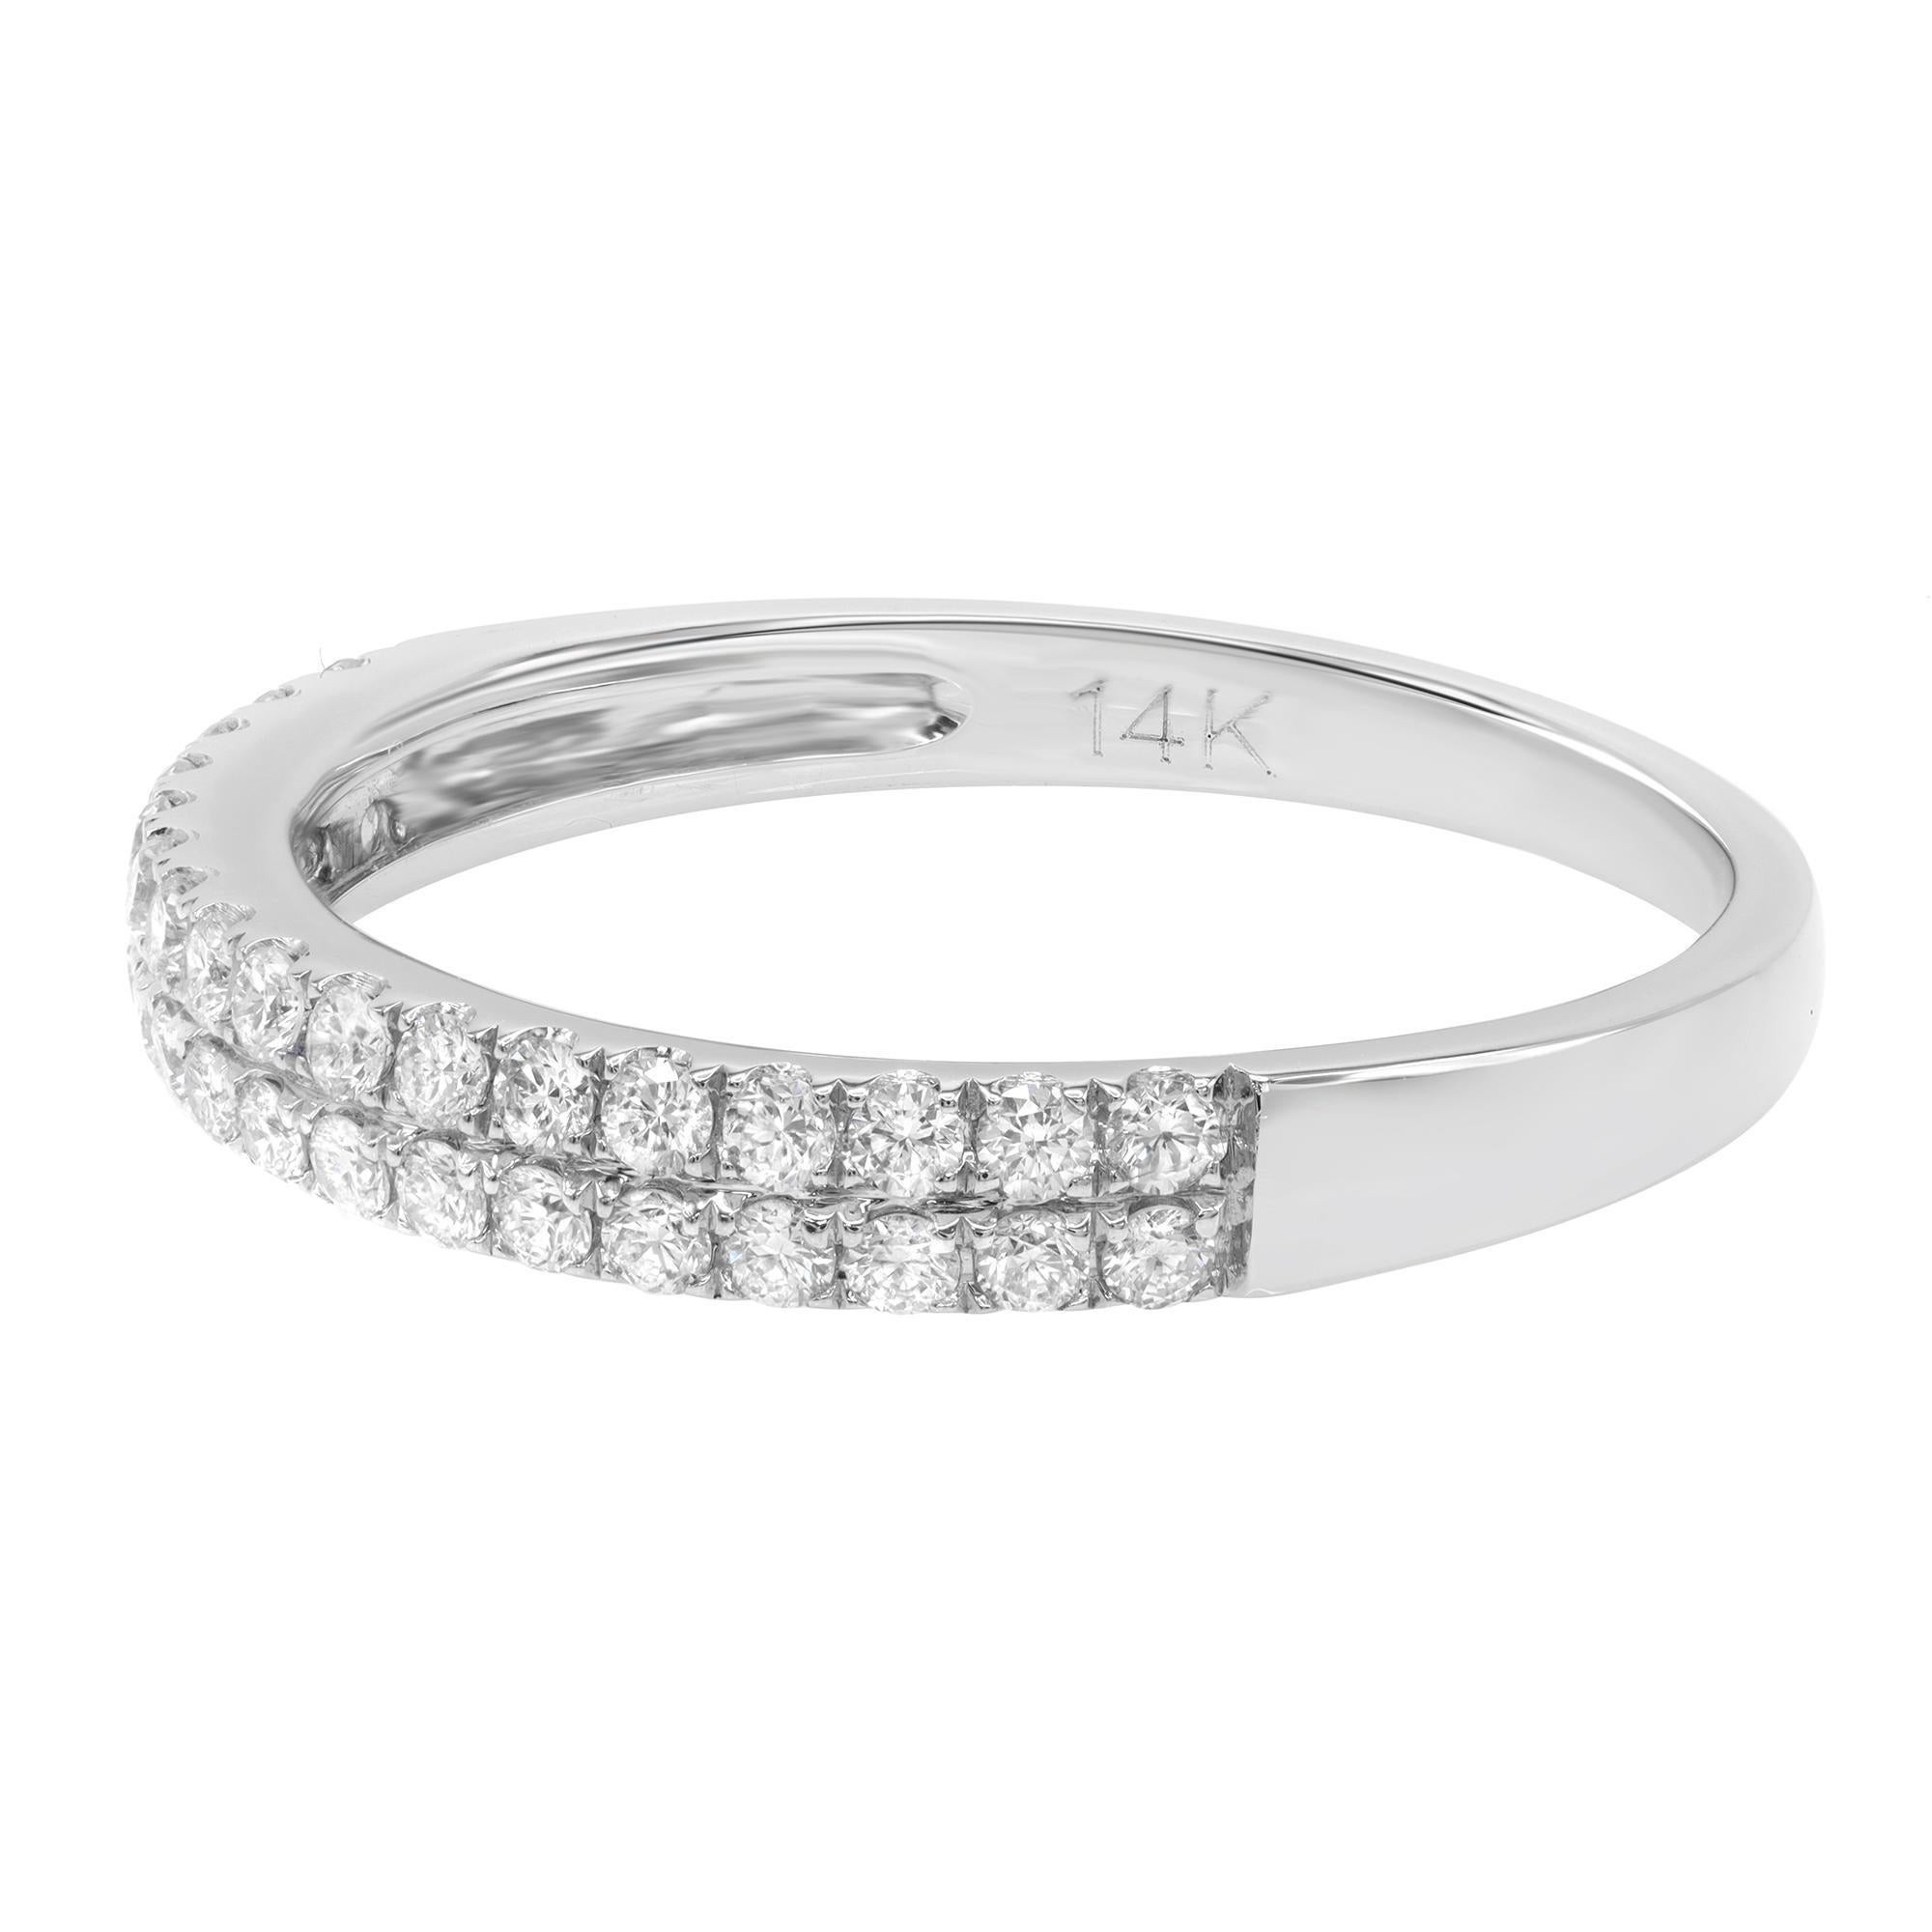 Modern Rachel Koen Double Row Pave Diamond Wedding Band Ring 14k White Gold 0.37cttw For Sale